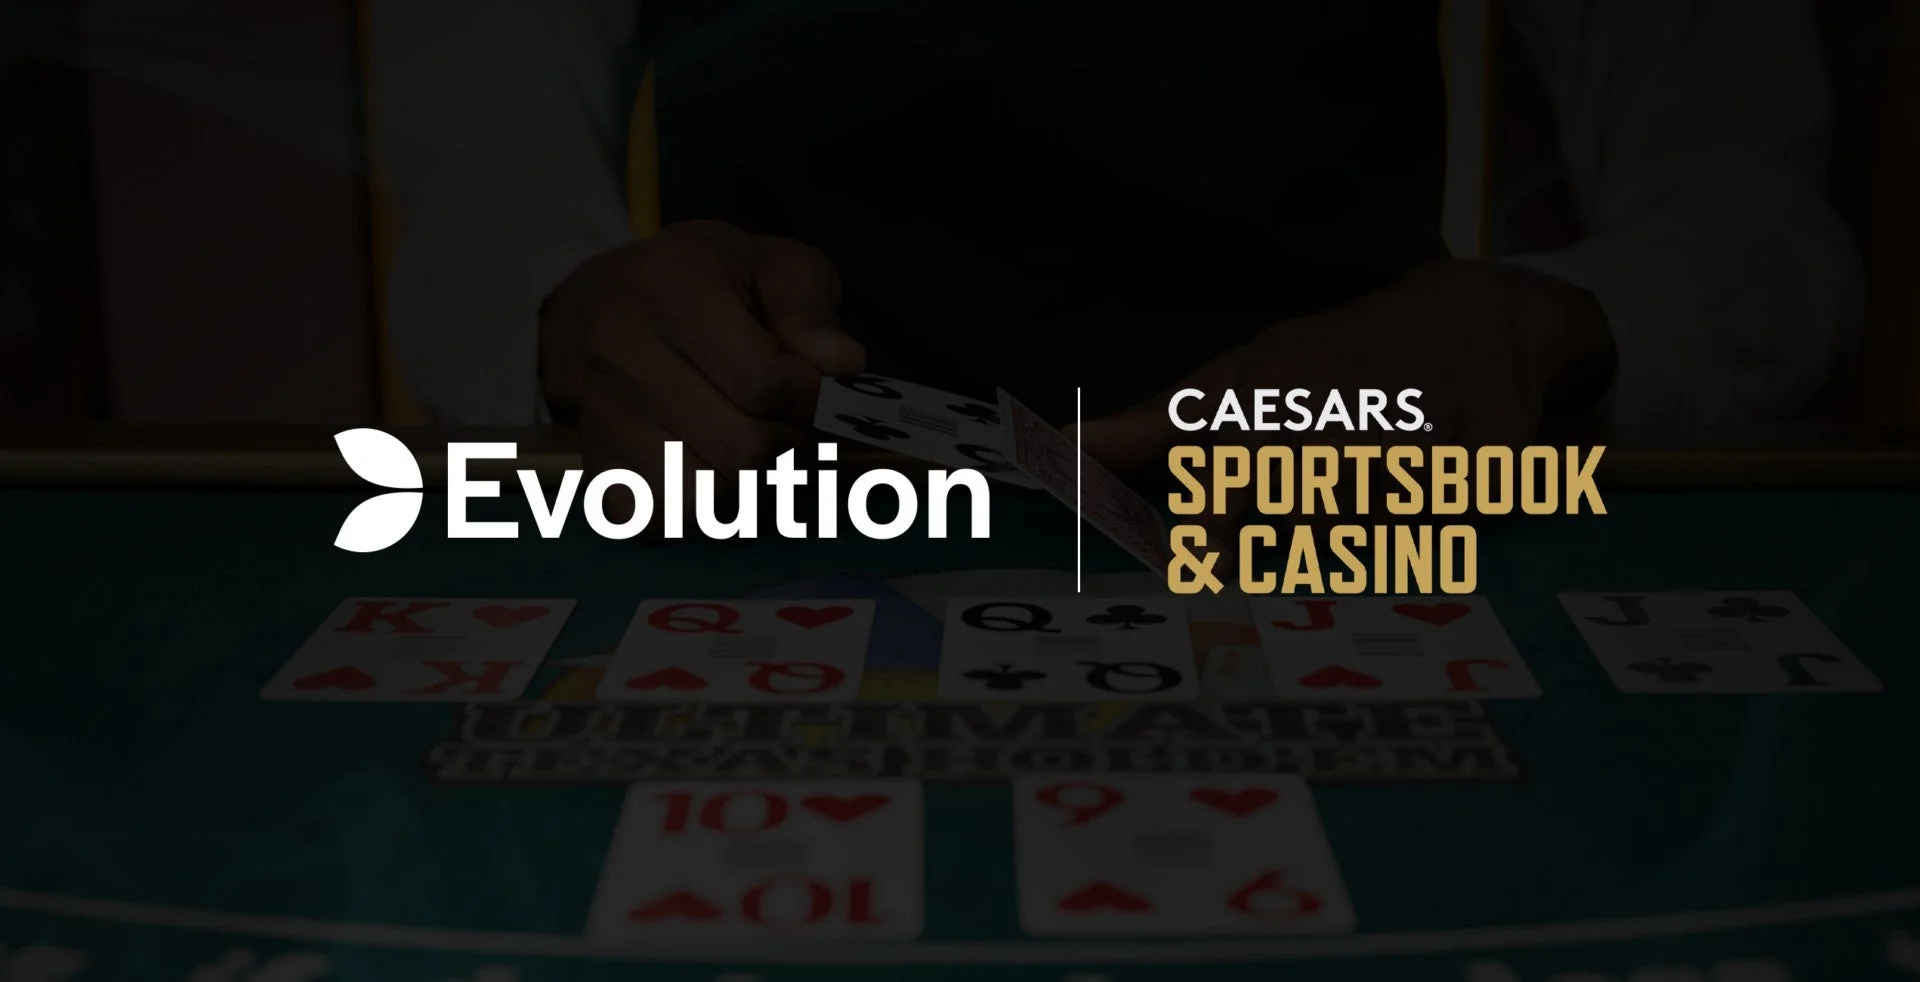 Evolution Partners With PA Online Casinos Caesars &Tropicana